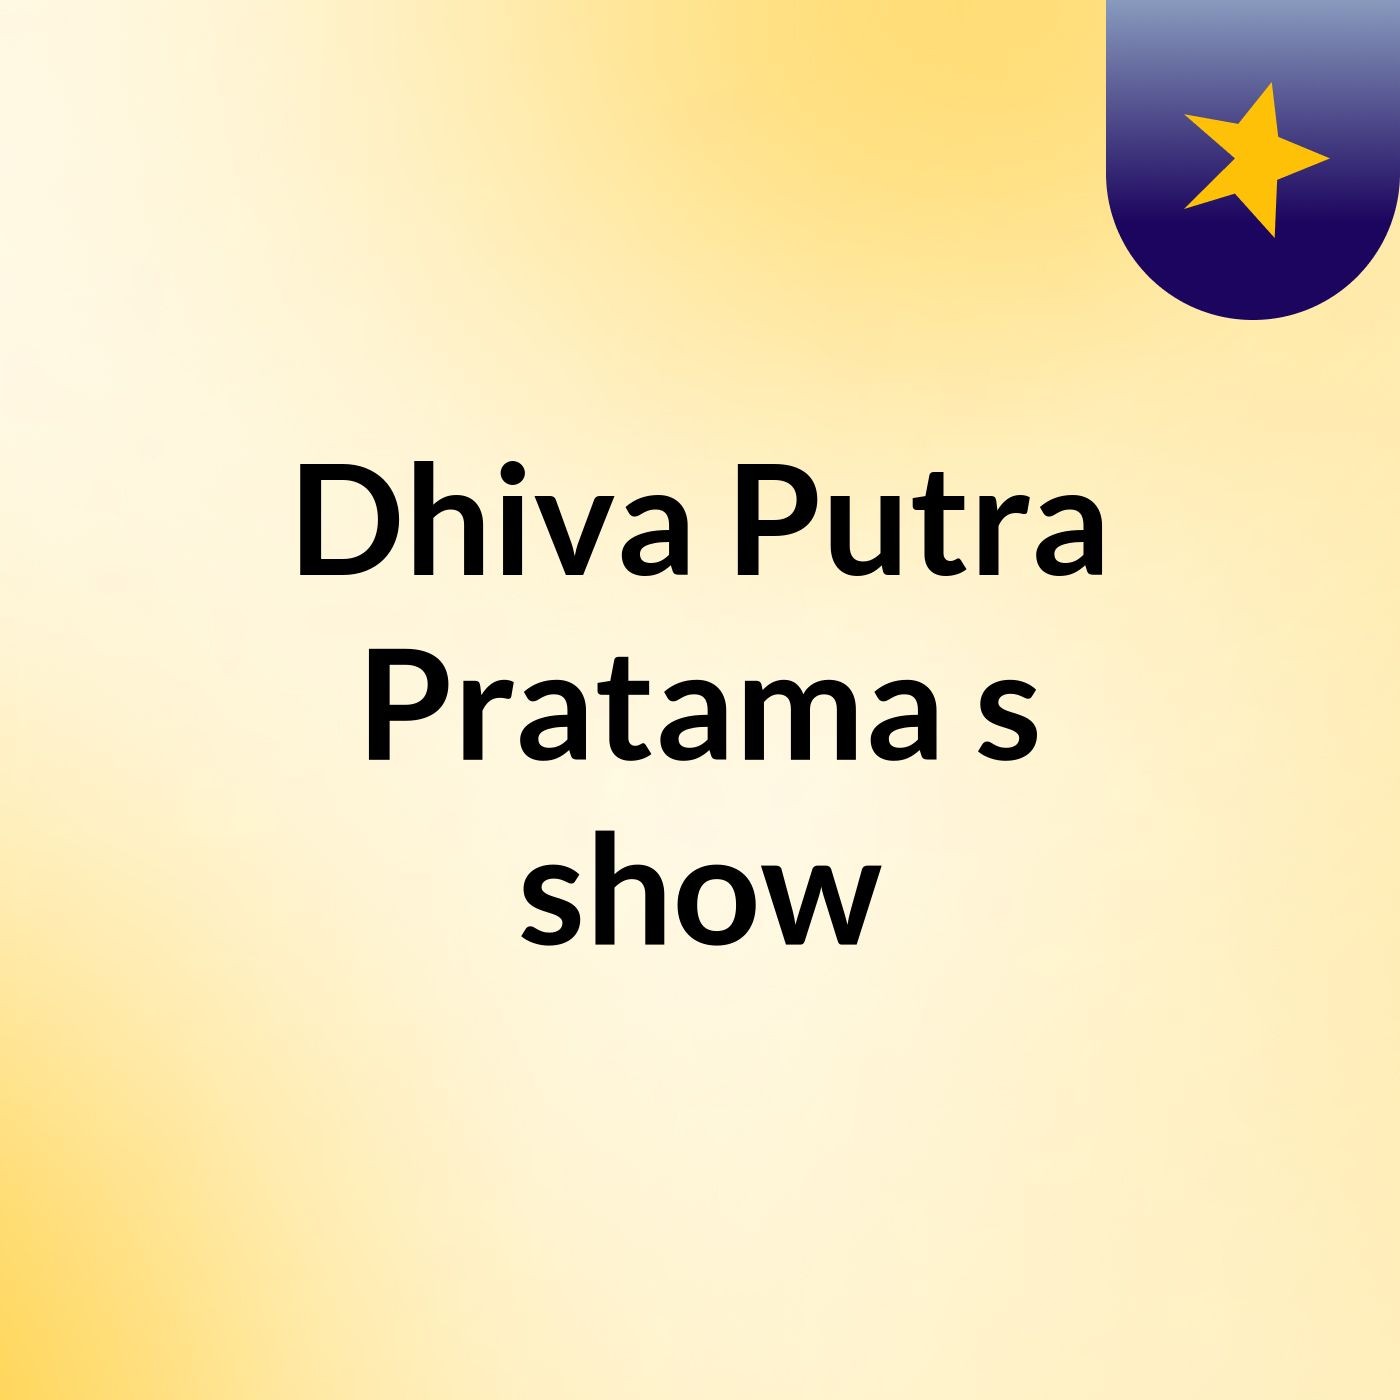 Dhiva Putra Pratama's show